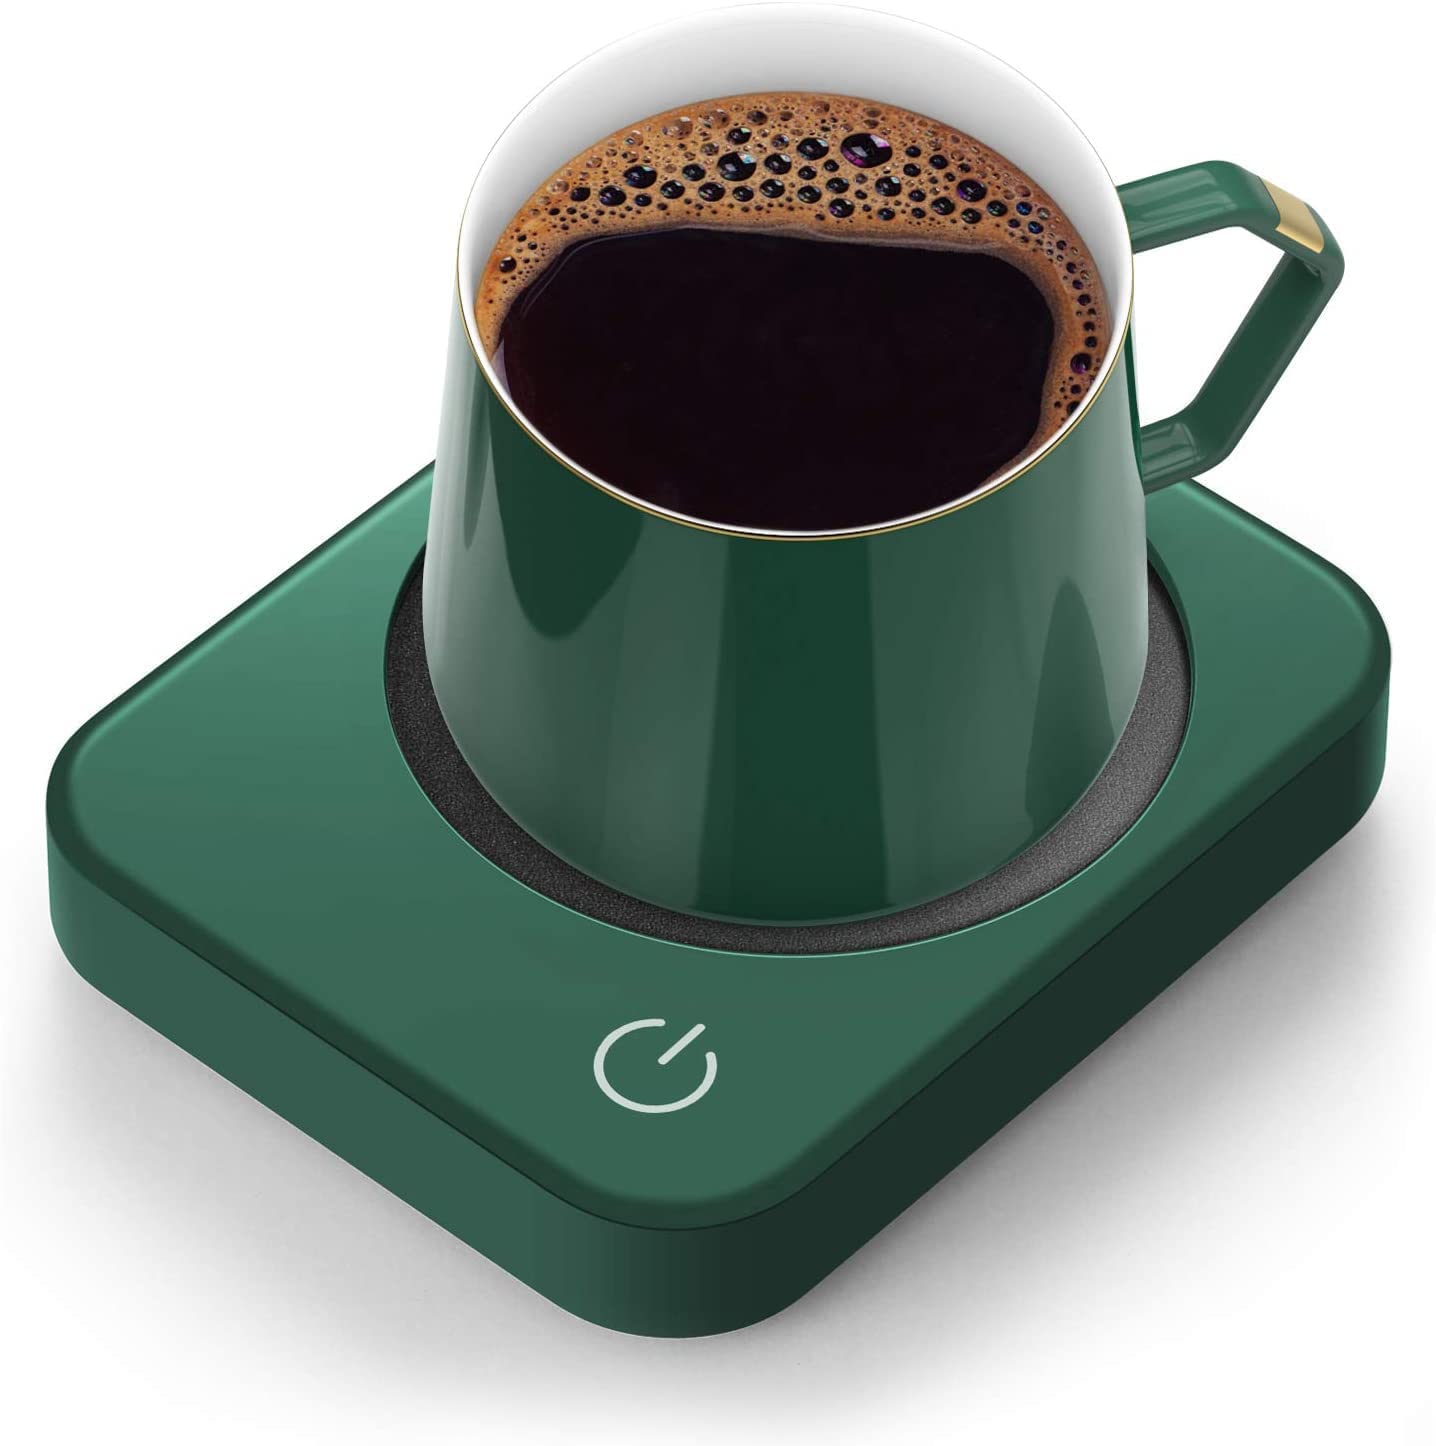 C1 Misby Coffee Warmer for Desk Mug Warmer with Automatic Shut Off